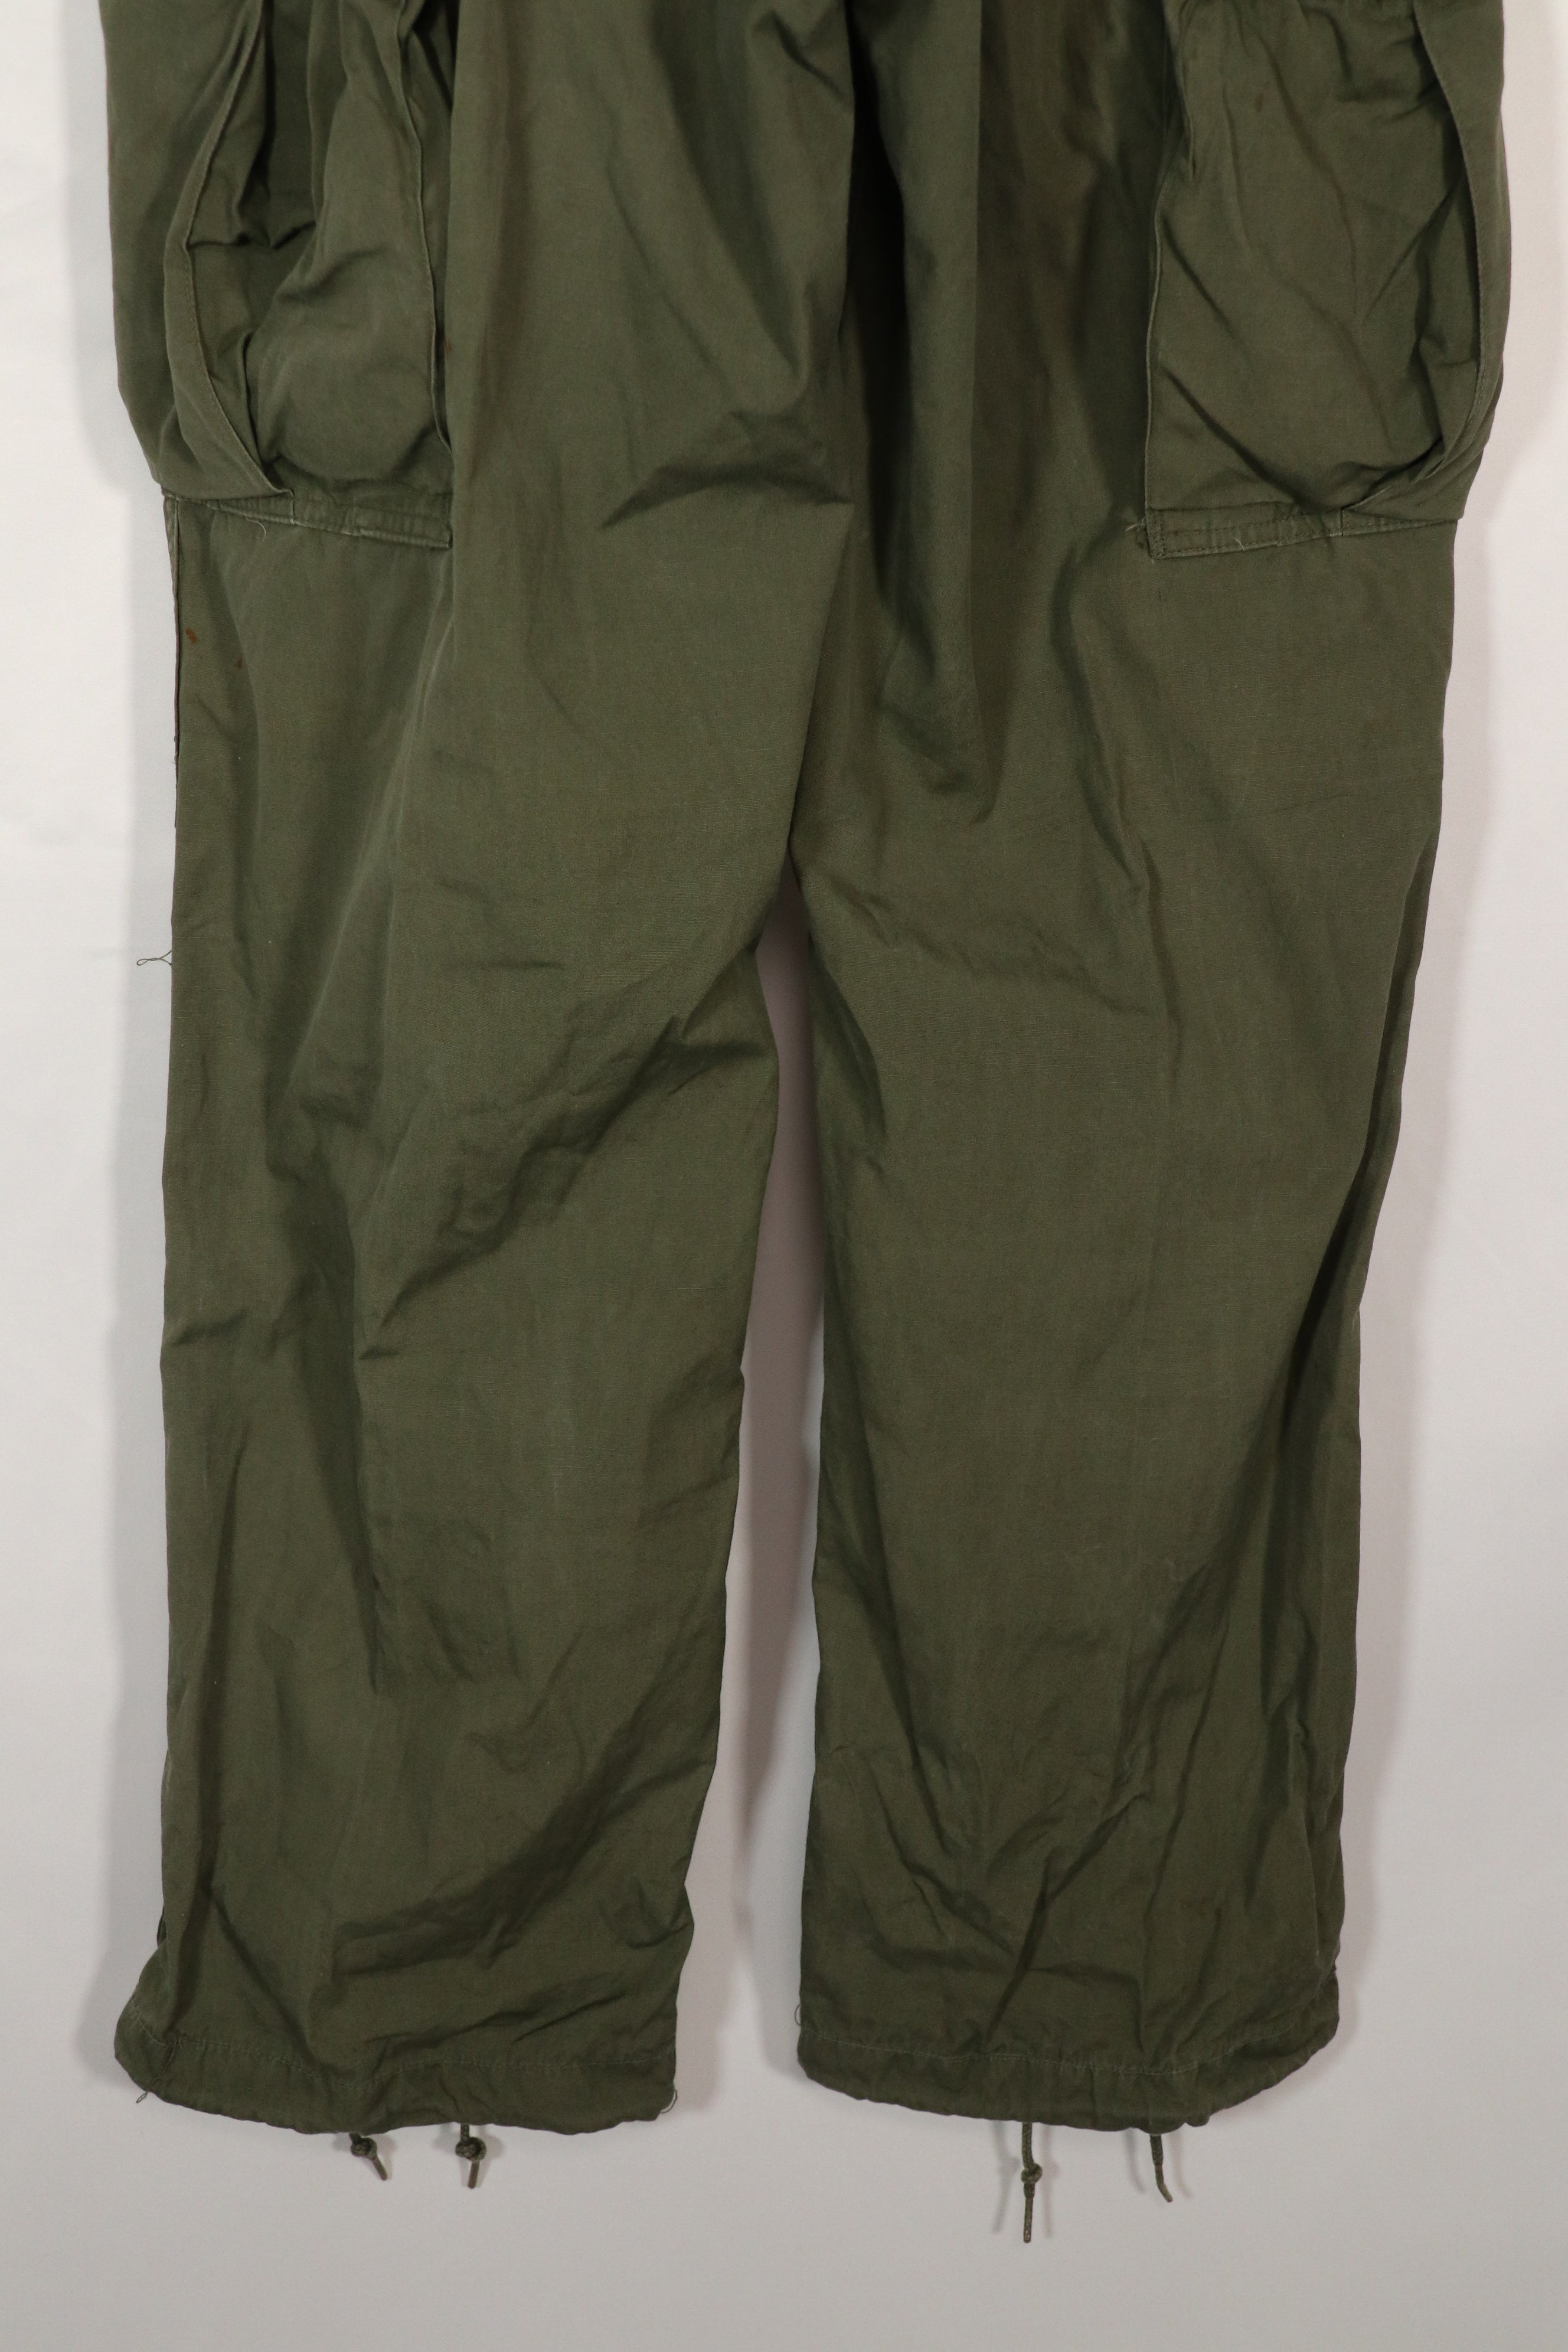 Real 2nd Model Jungle Fatigue Pants, Used, Rare